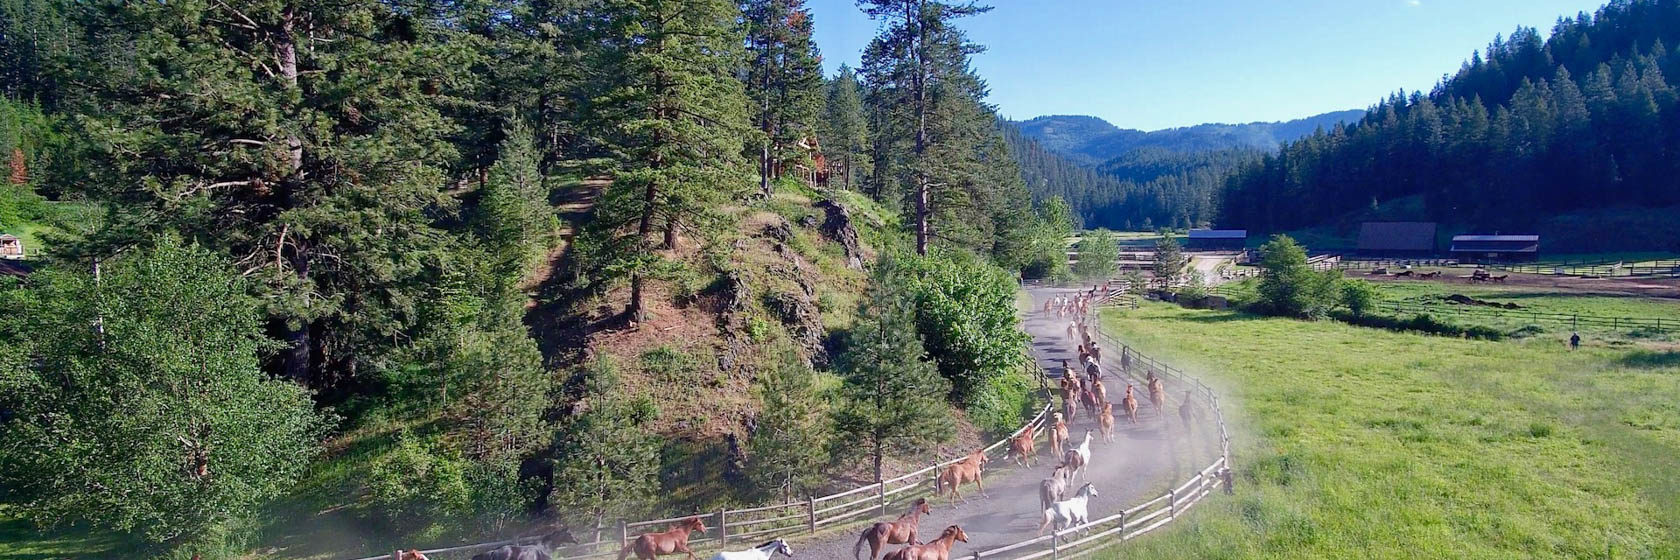 Herd running